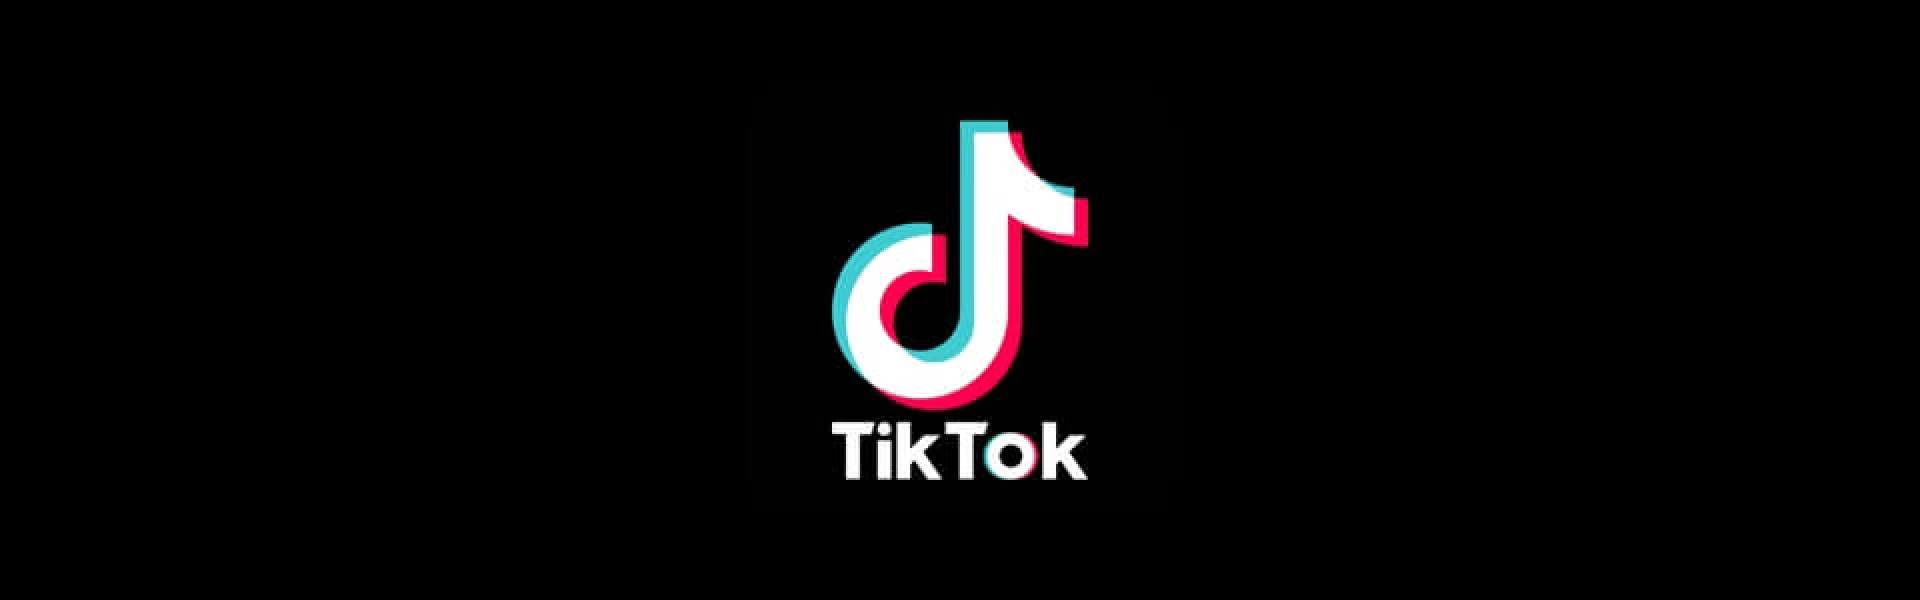 TikTok App Popularity Secrets and Some Handy Tips for an App-Like-It Development